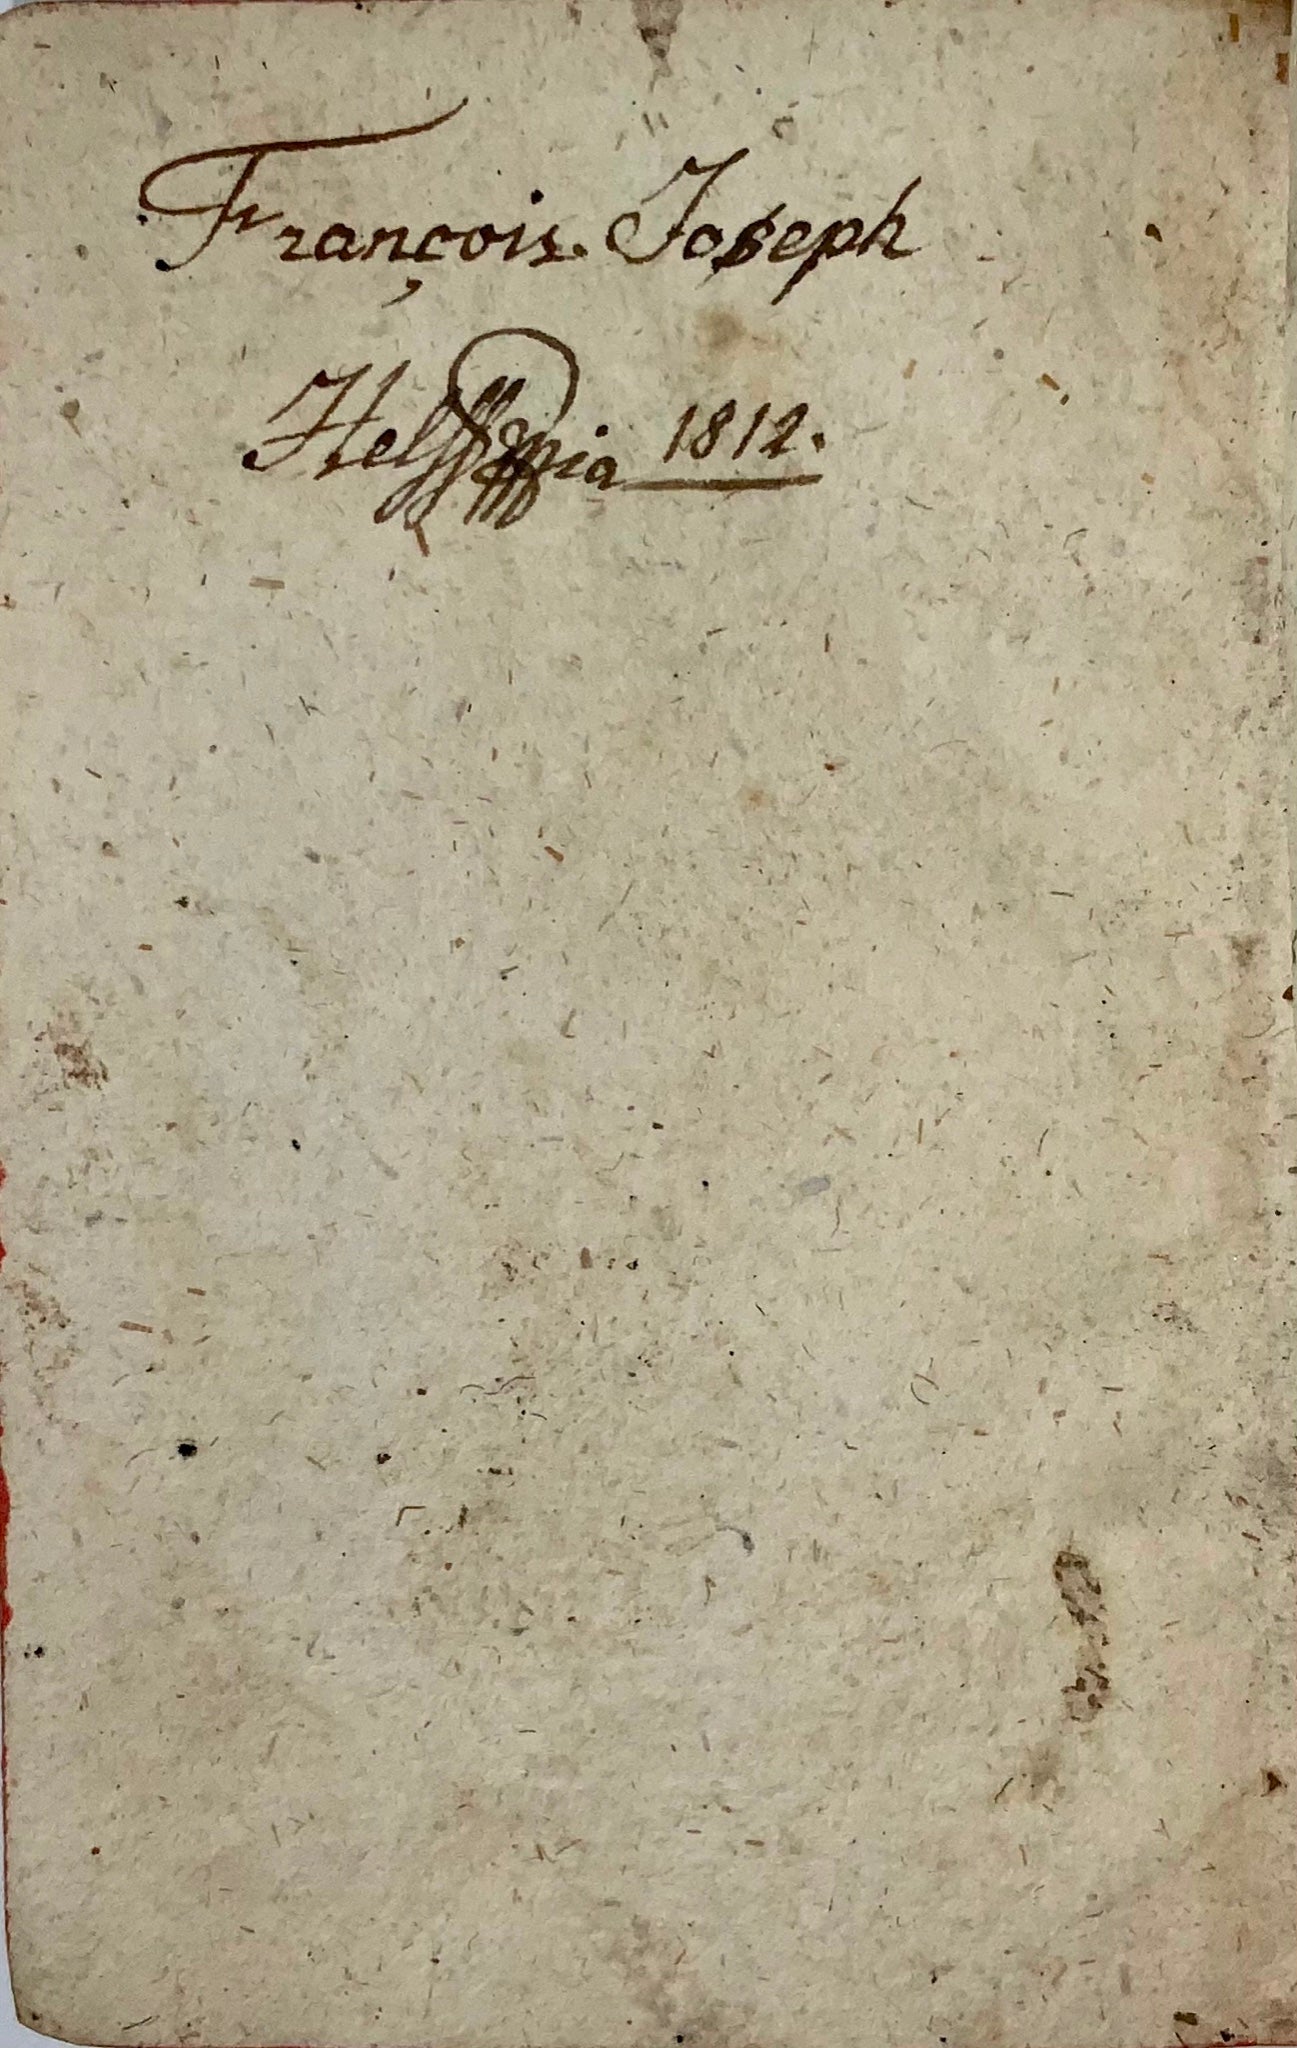 1798 Christian Harmony, Receuil de cantiques, London imprint, book